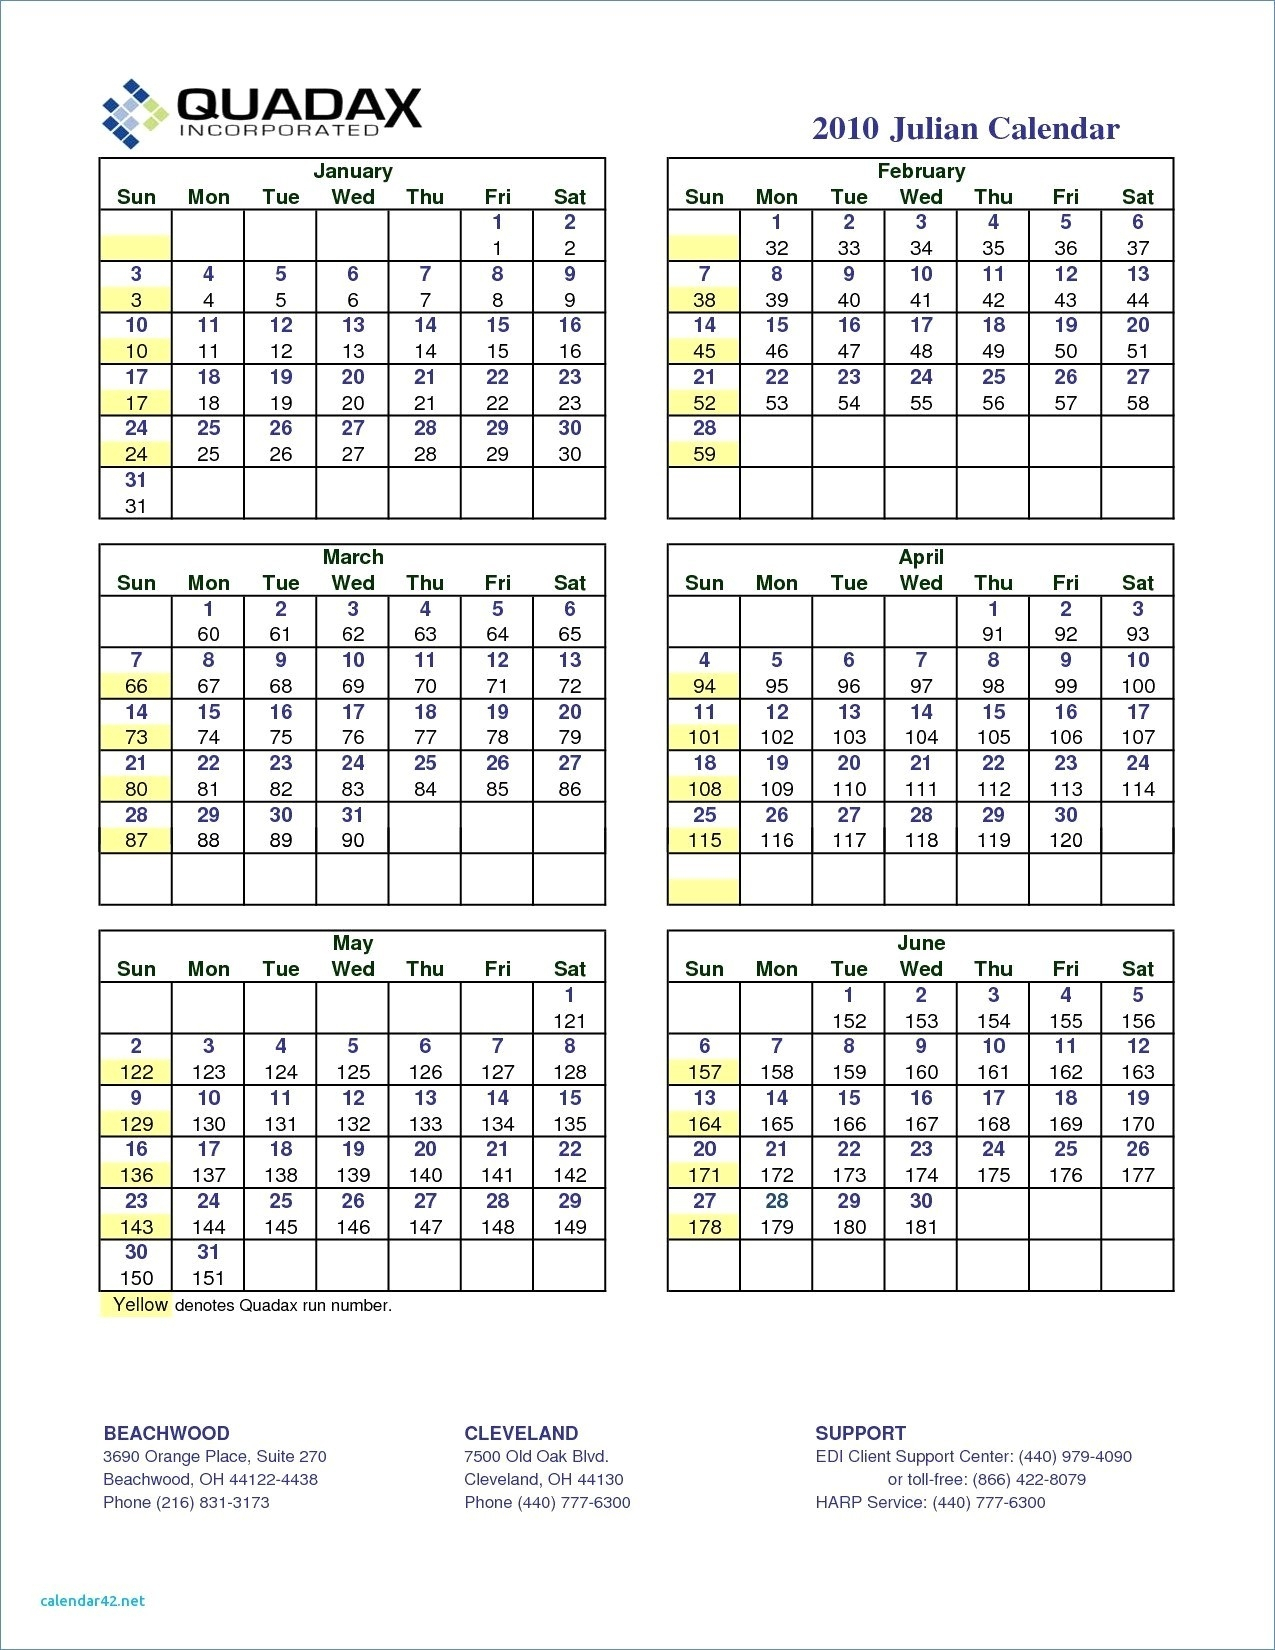 Quadax Julian Calendar 2020 Pdf | Example Calendar Printable intended for Julian Calendar 2020 Quadax